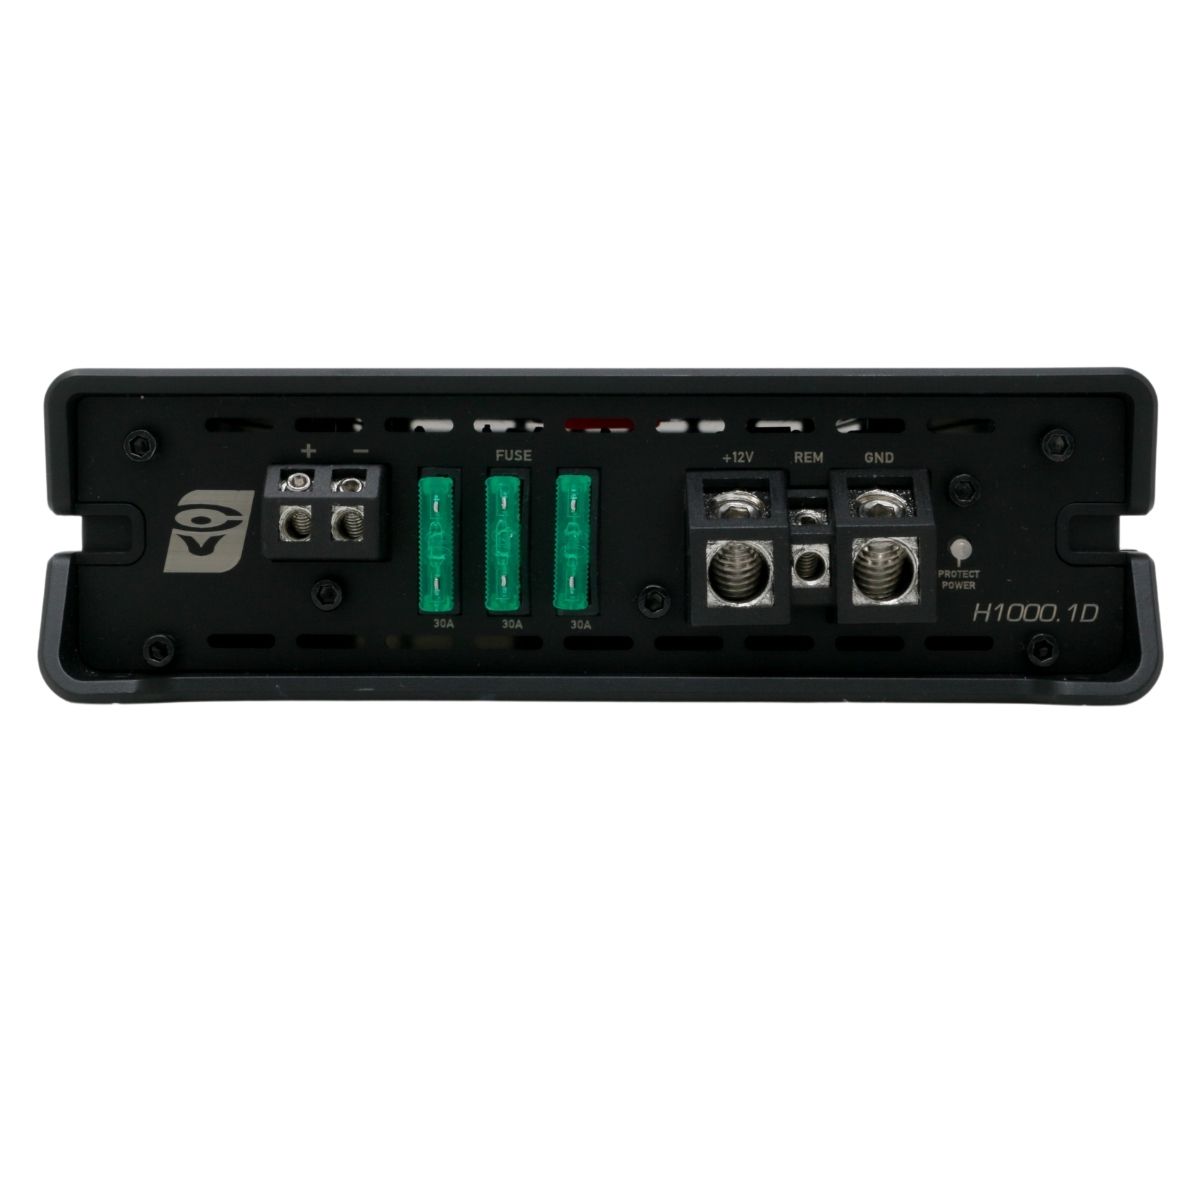 Cerwin Vega H1000.1D 600W RMS Full Range Class-D Mono Digital Amplifier